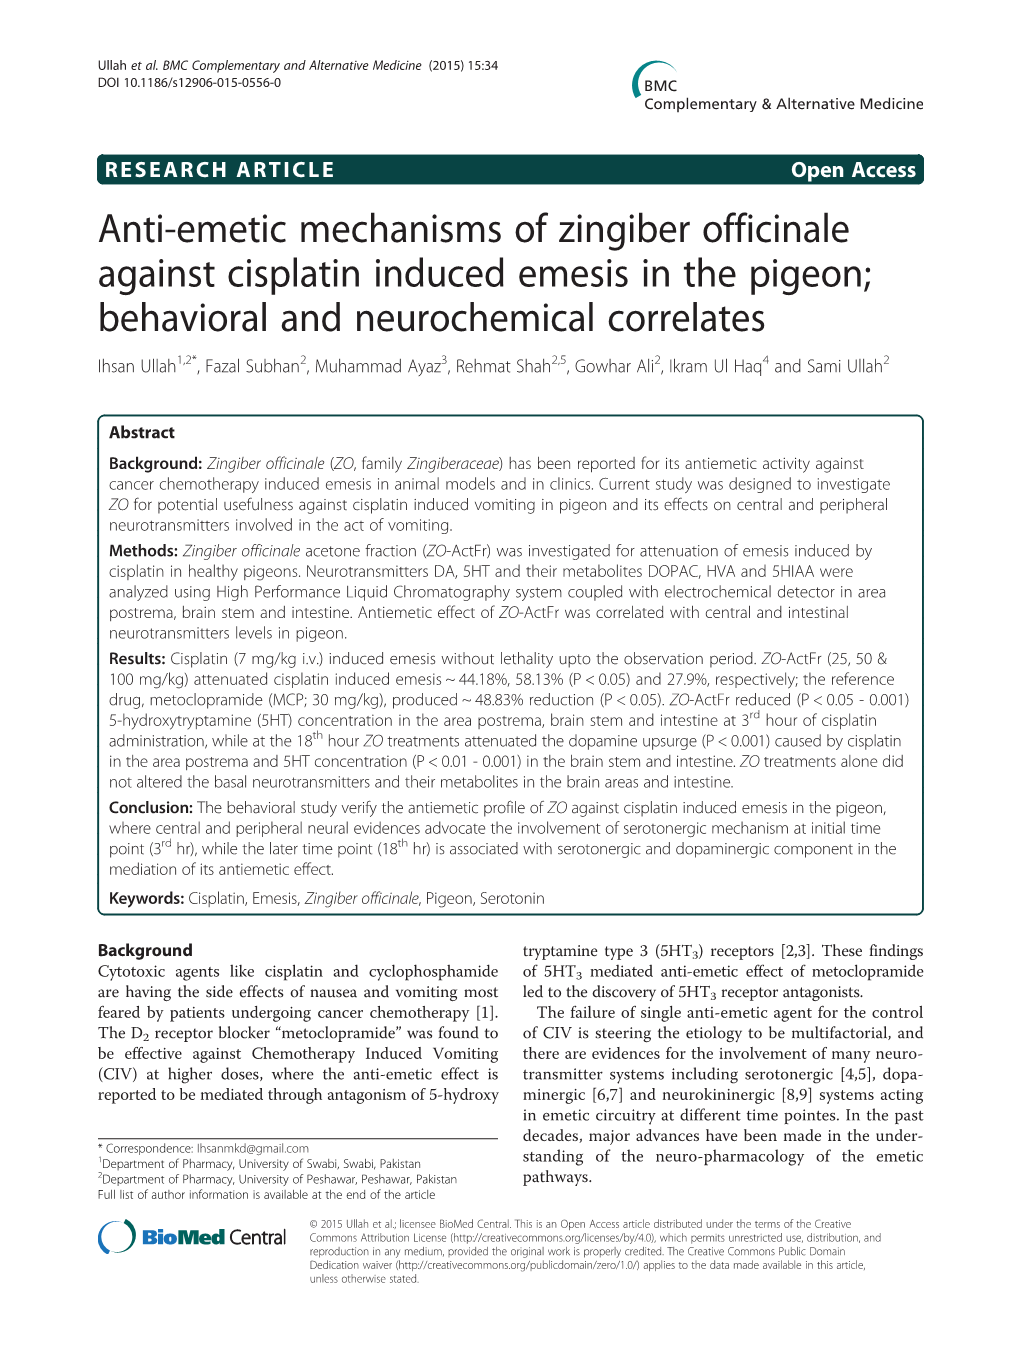 Anti-Emetic Mechanisms of Zingiber Officinale Against Cisplatin Induced